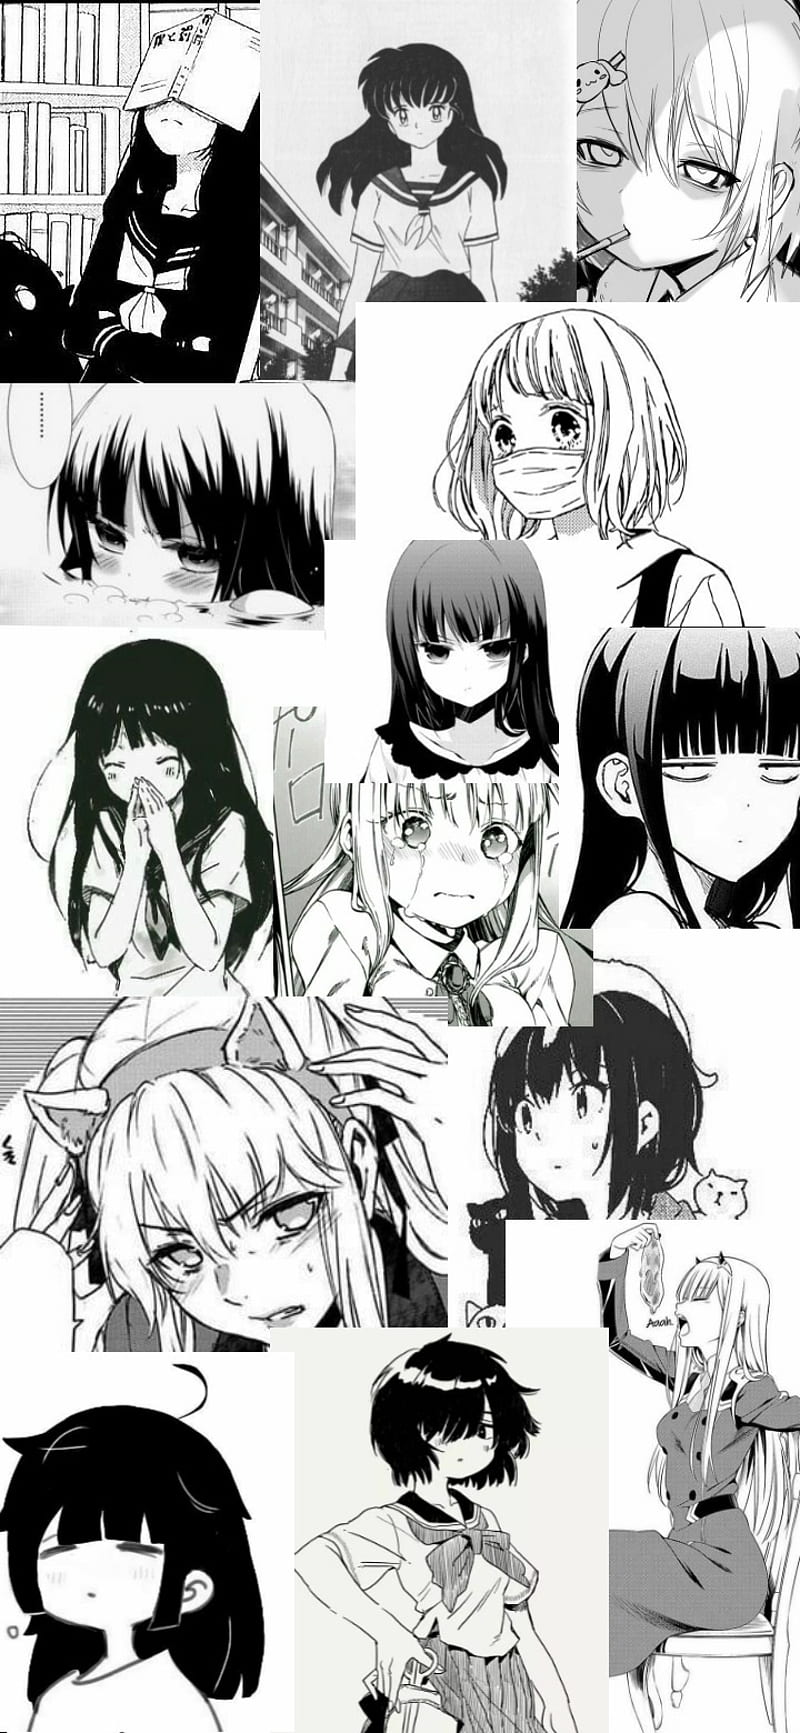 Dark Anime Manga Girls Latest Wallpapers, Anime Wallpapers, TheWaoFam